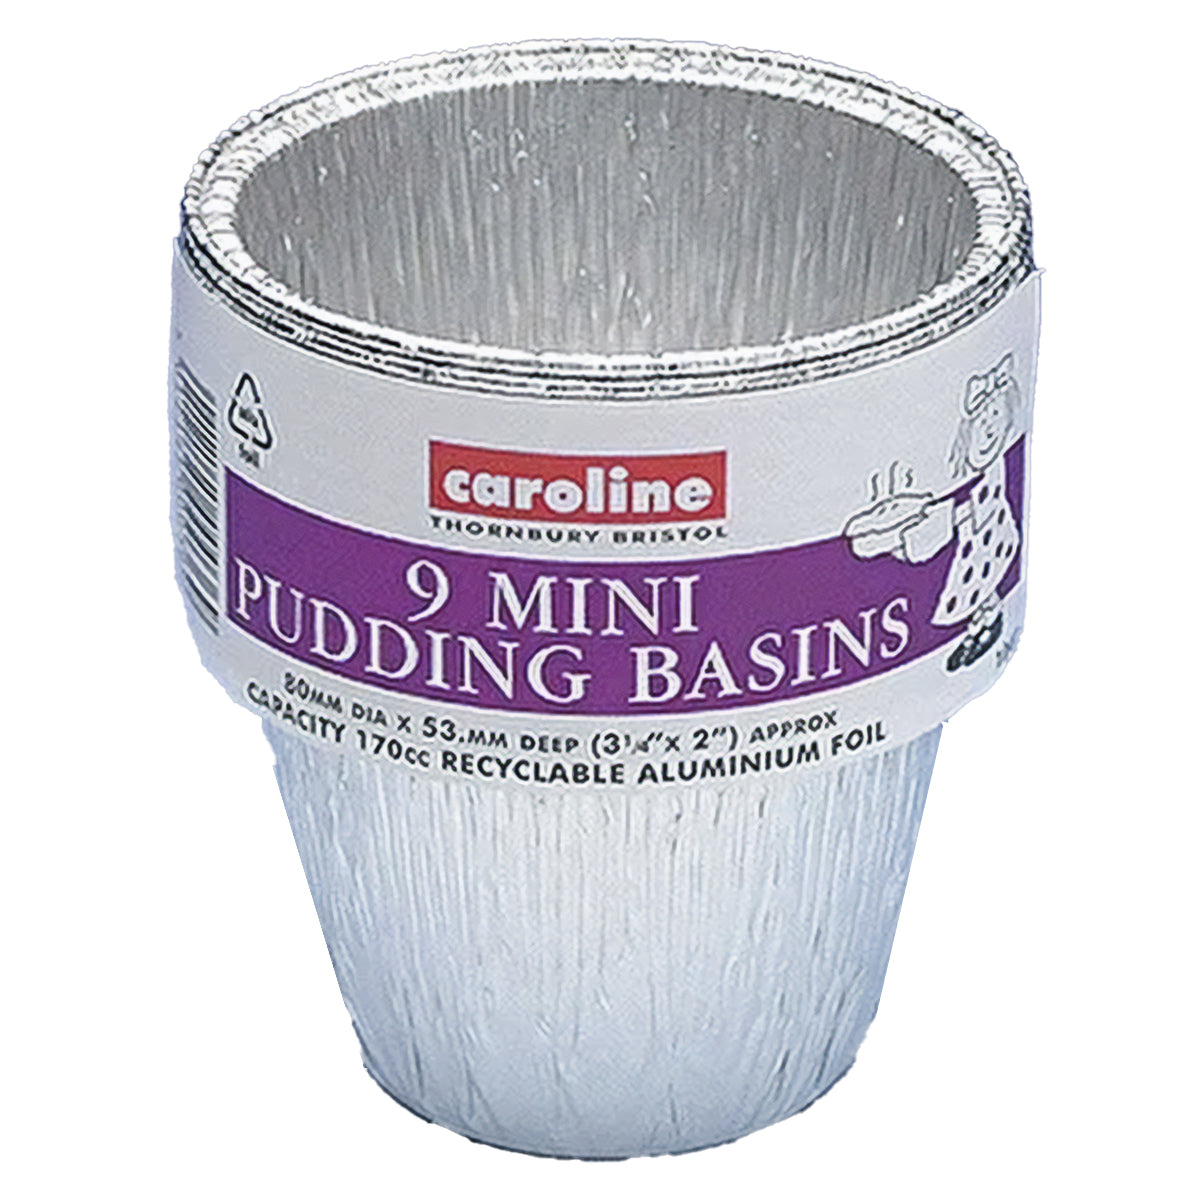 Caroline - Mini Pudding Basins - 10 Pack - Continental Food Store